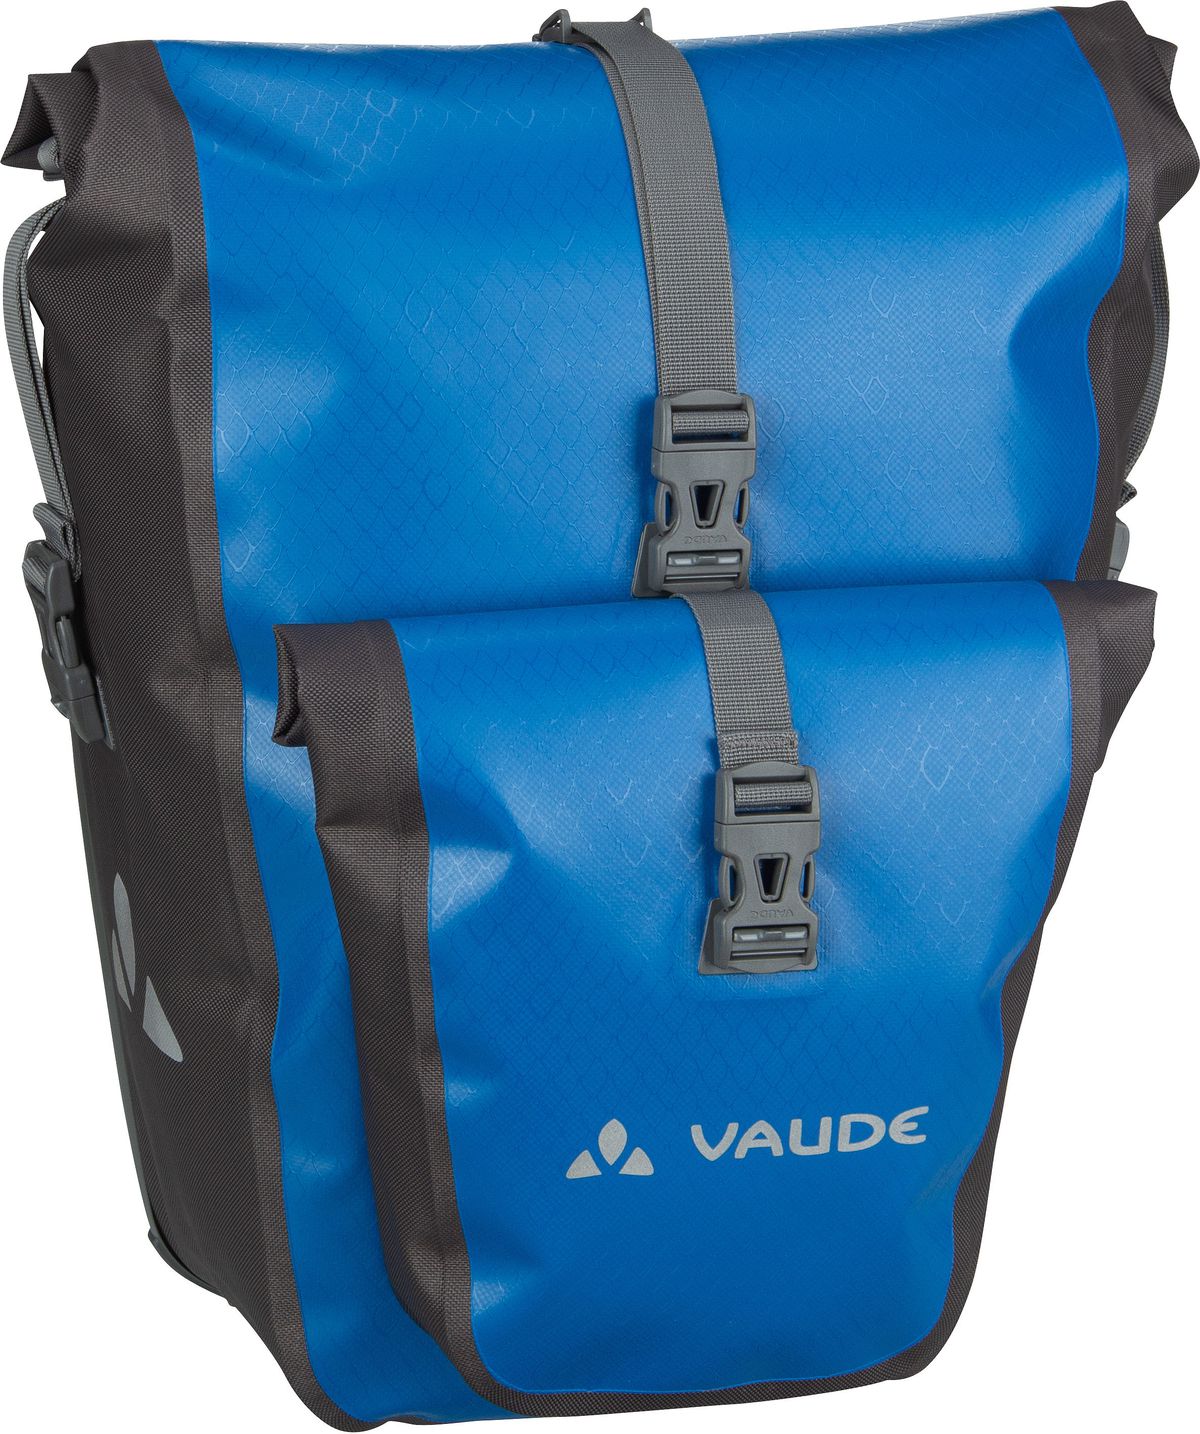 Vaude  Aqua Back Plus Single - Fahrradtasche - Blau (Blue)